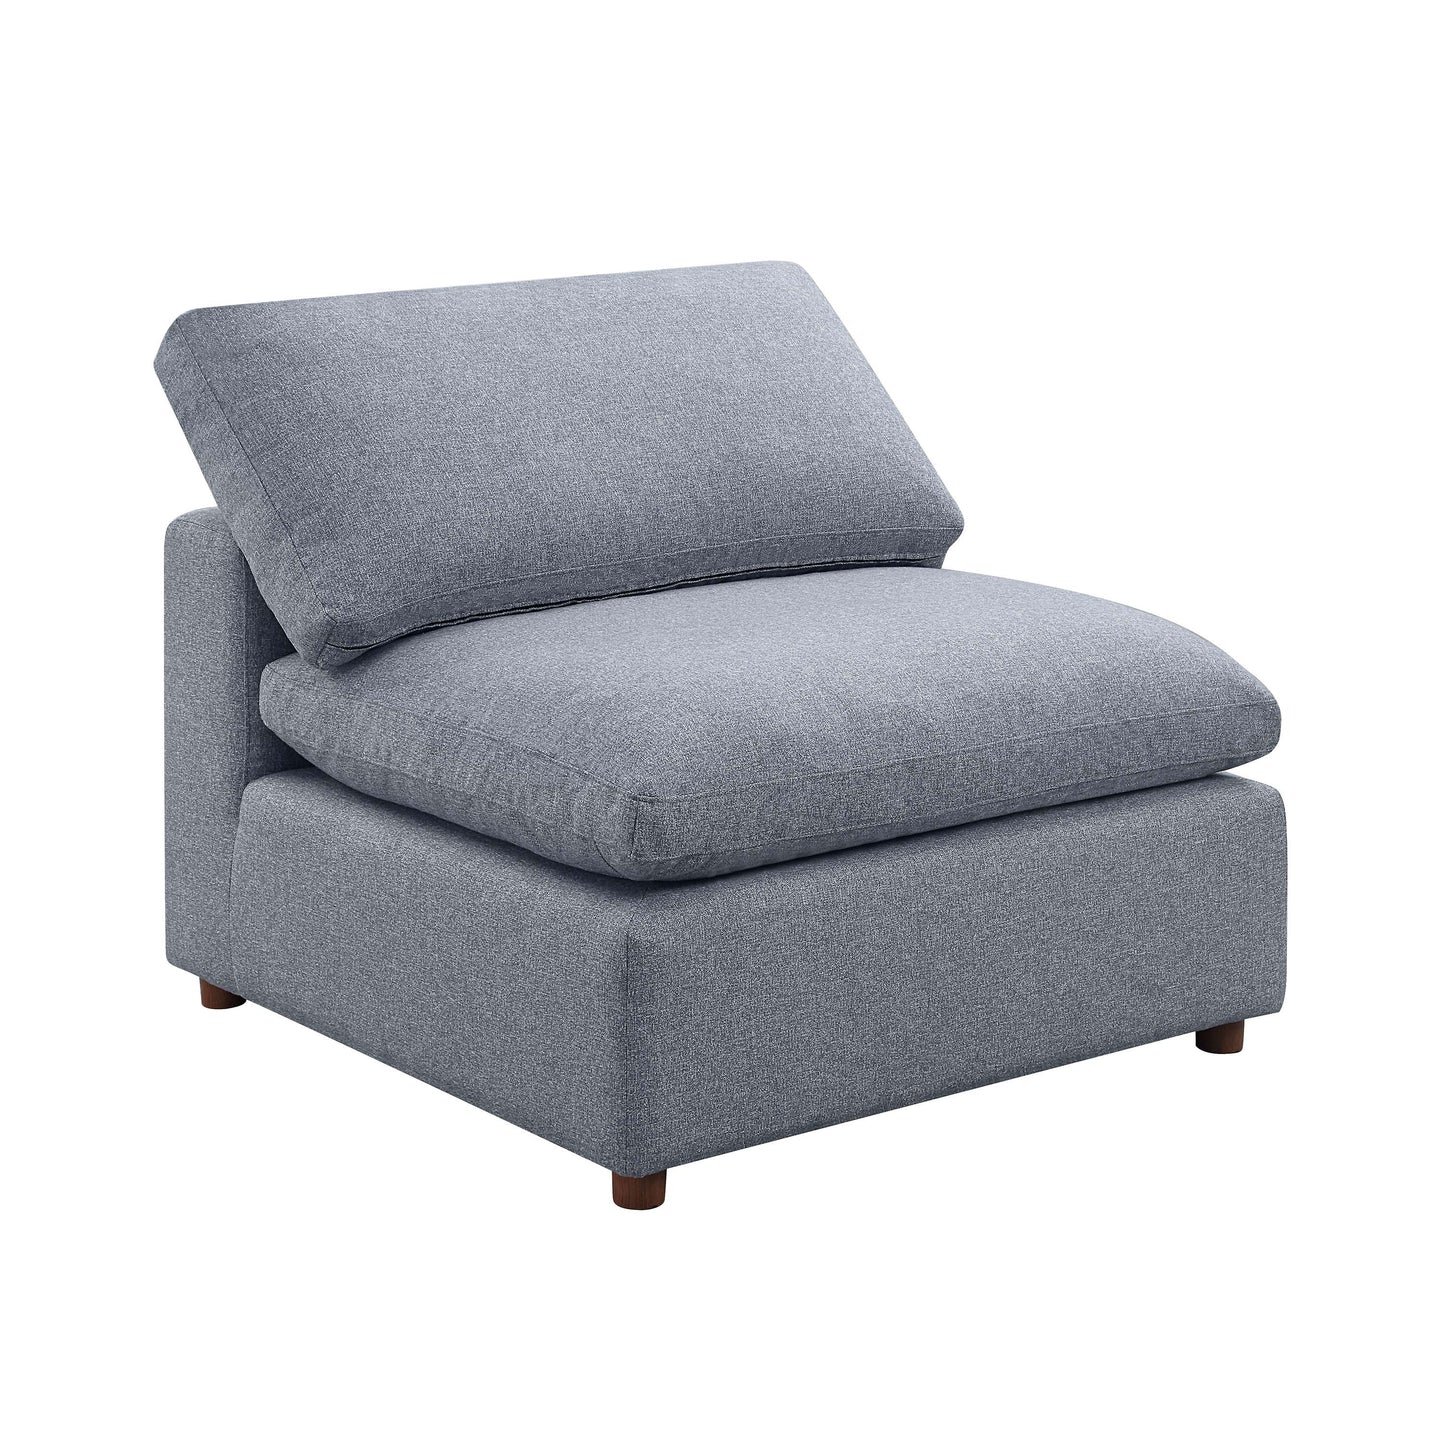 Modern Modular Sectional Sofa Set, Self-customization Design Sofa, Grey - Enova Luxe Home Store